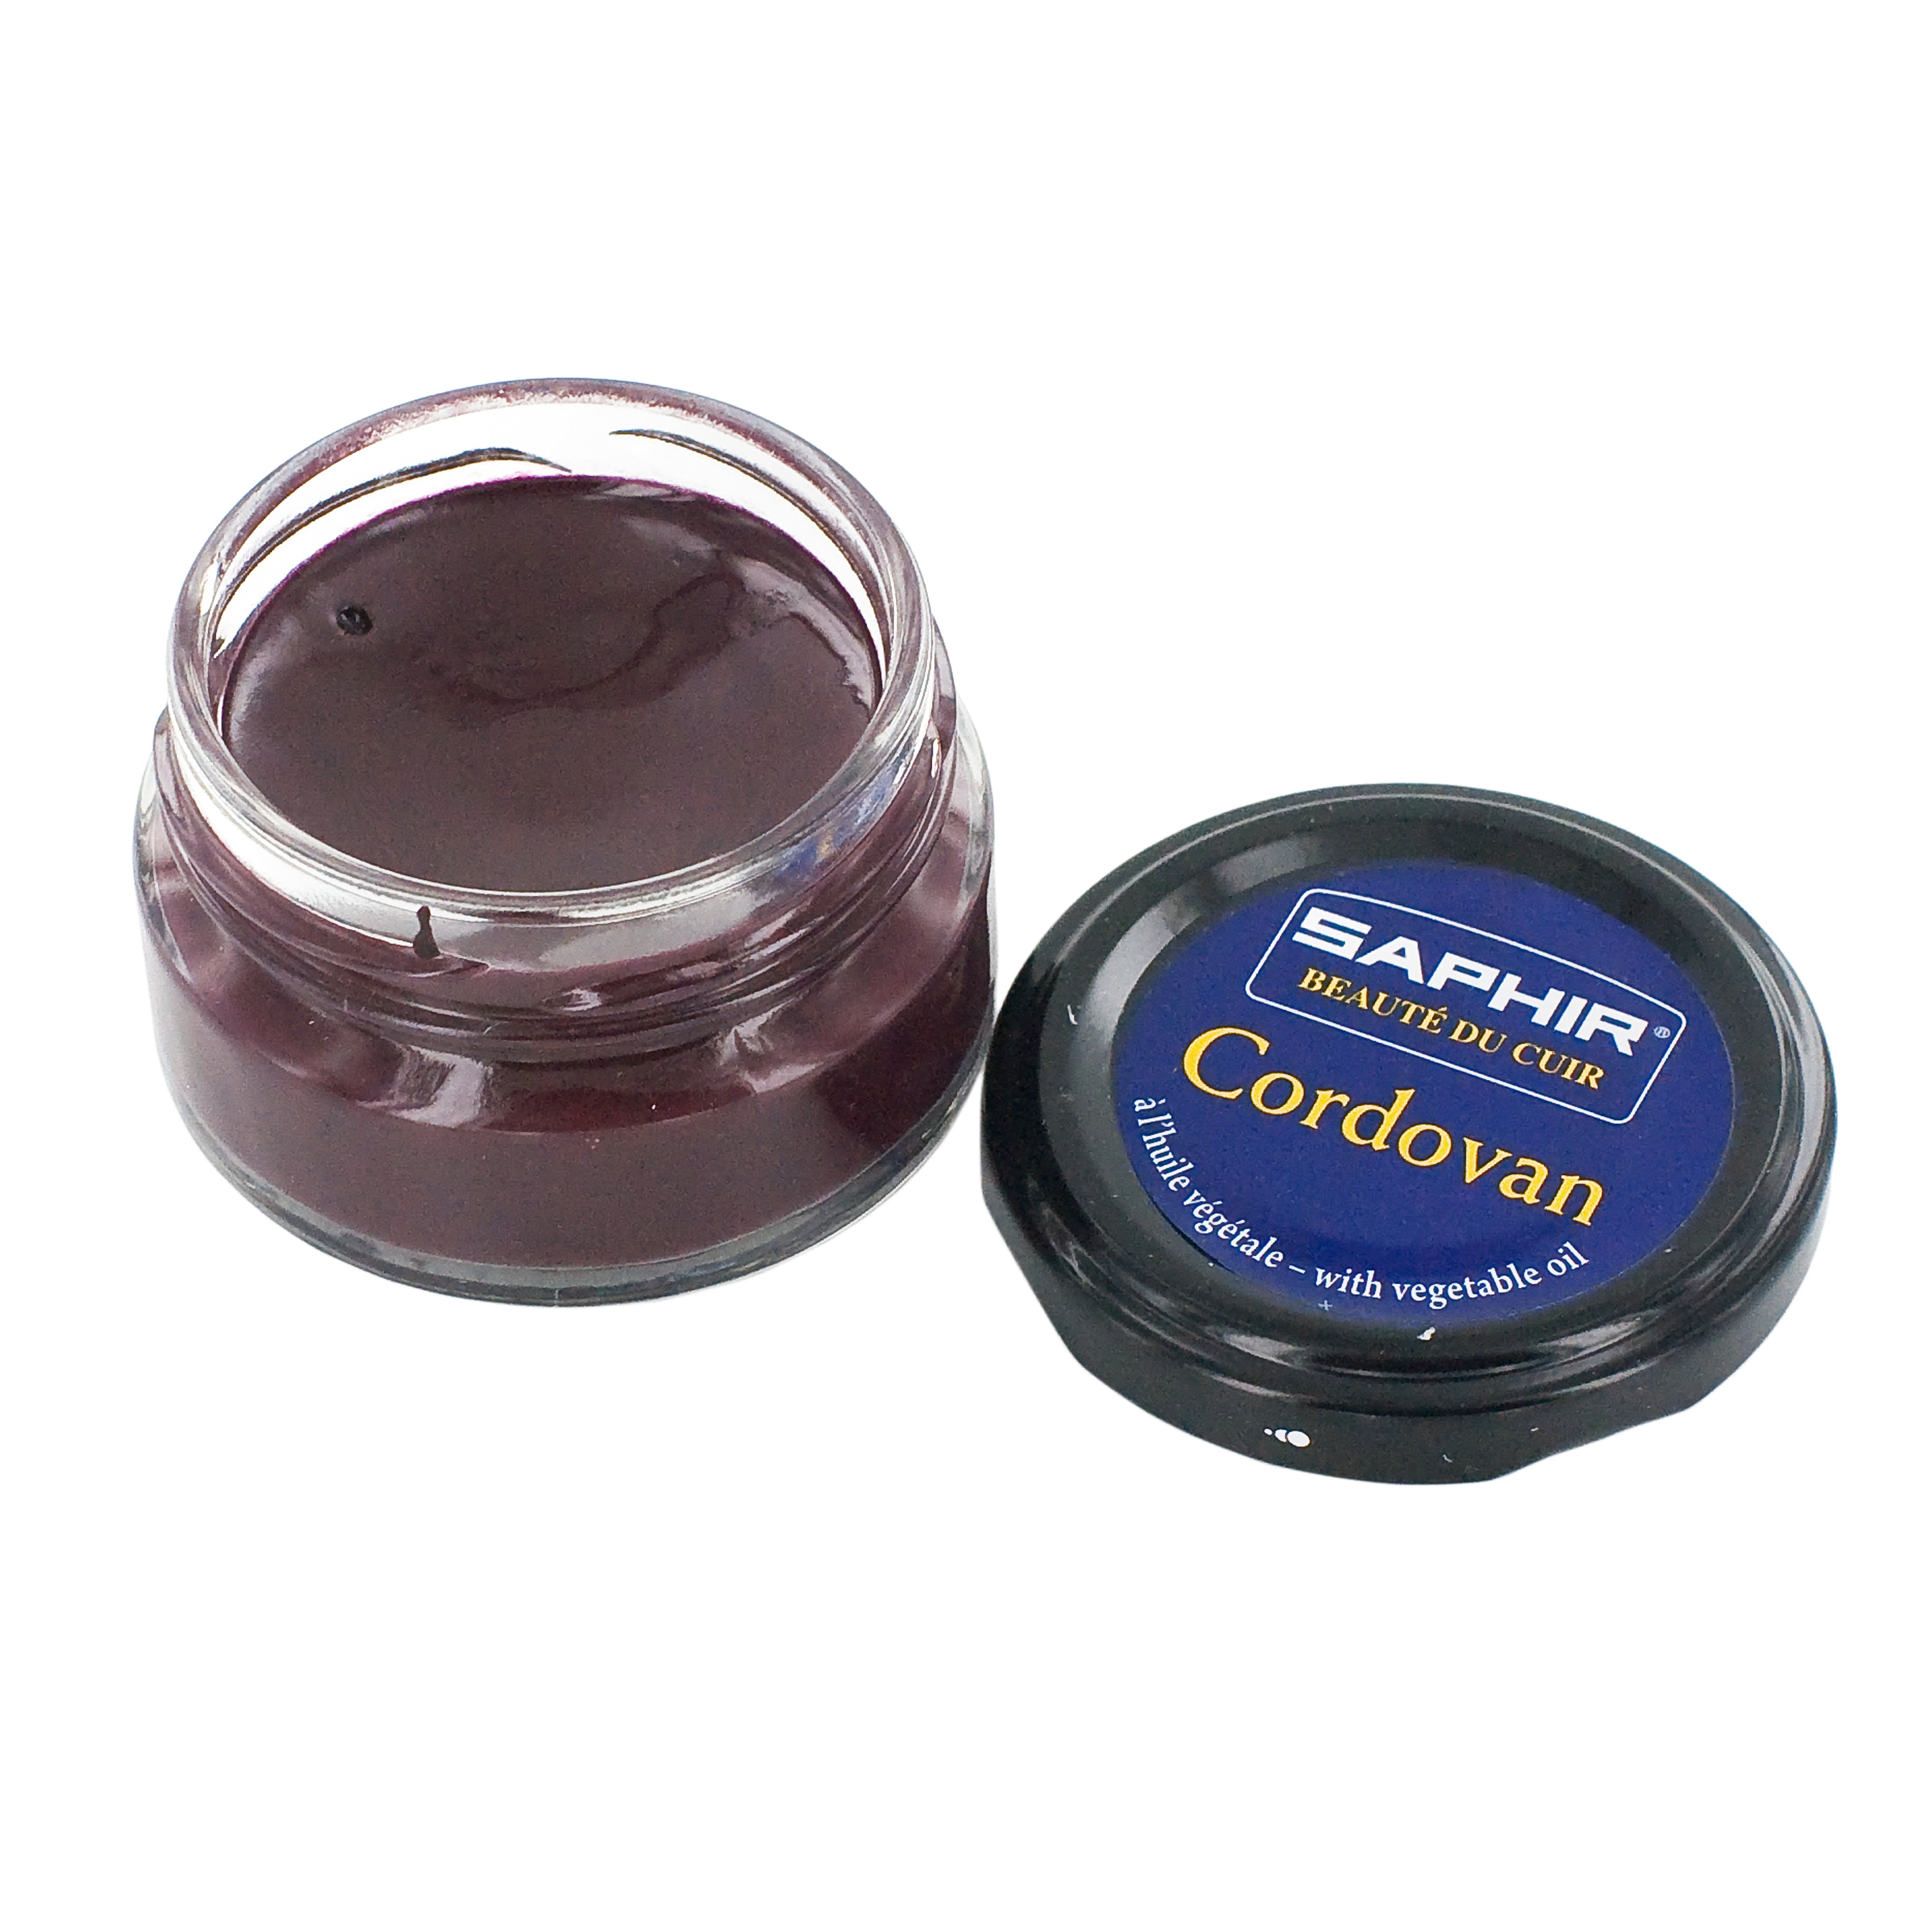 Saphir BdC Cordovan Cream Jar 1.69oz